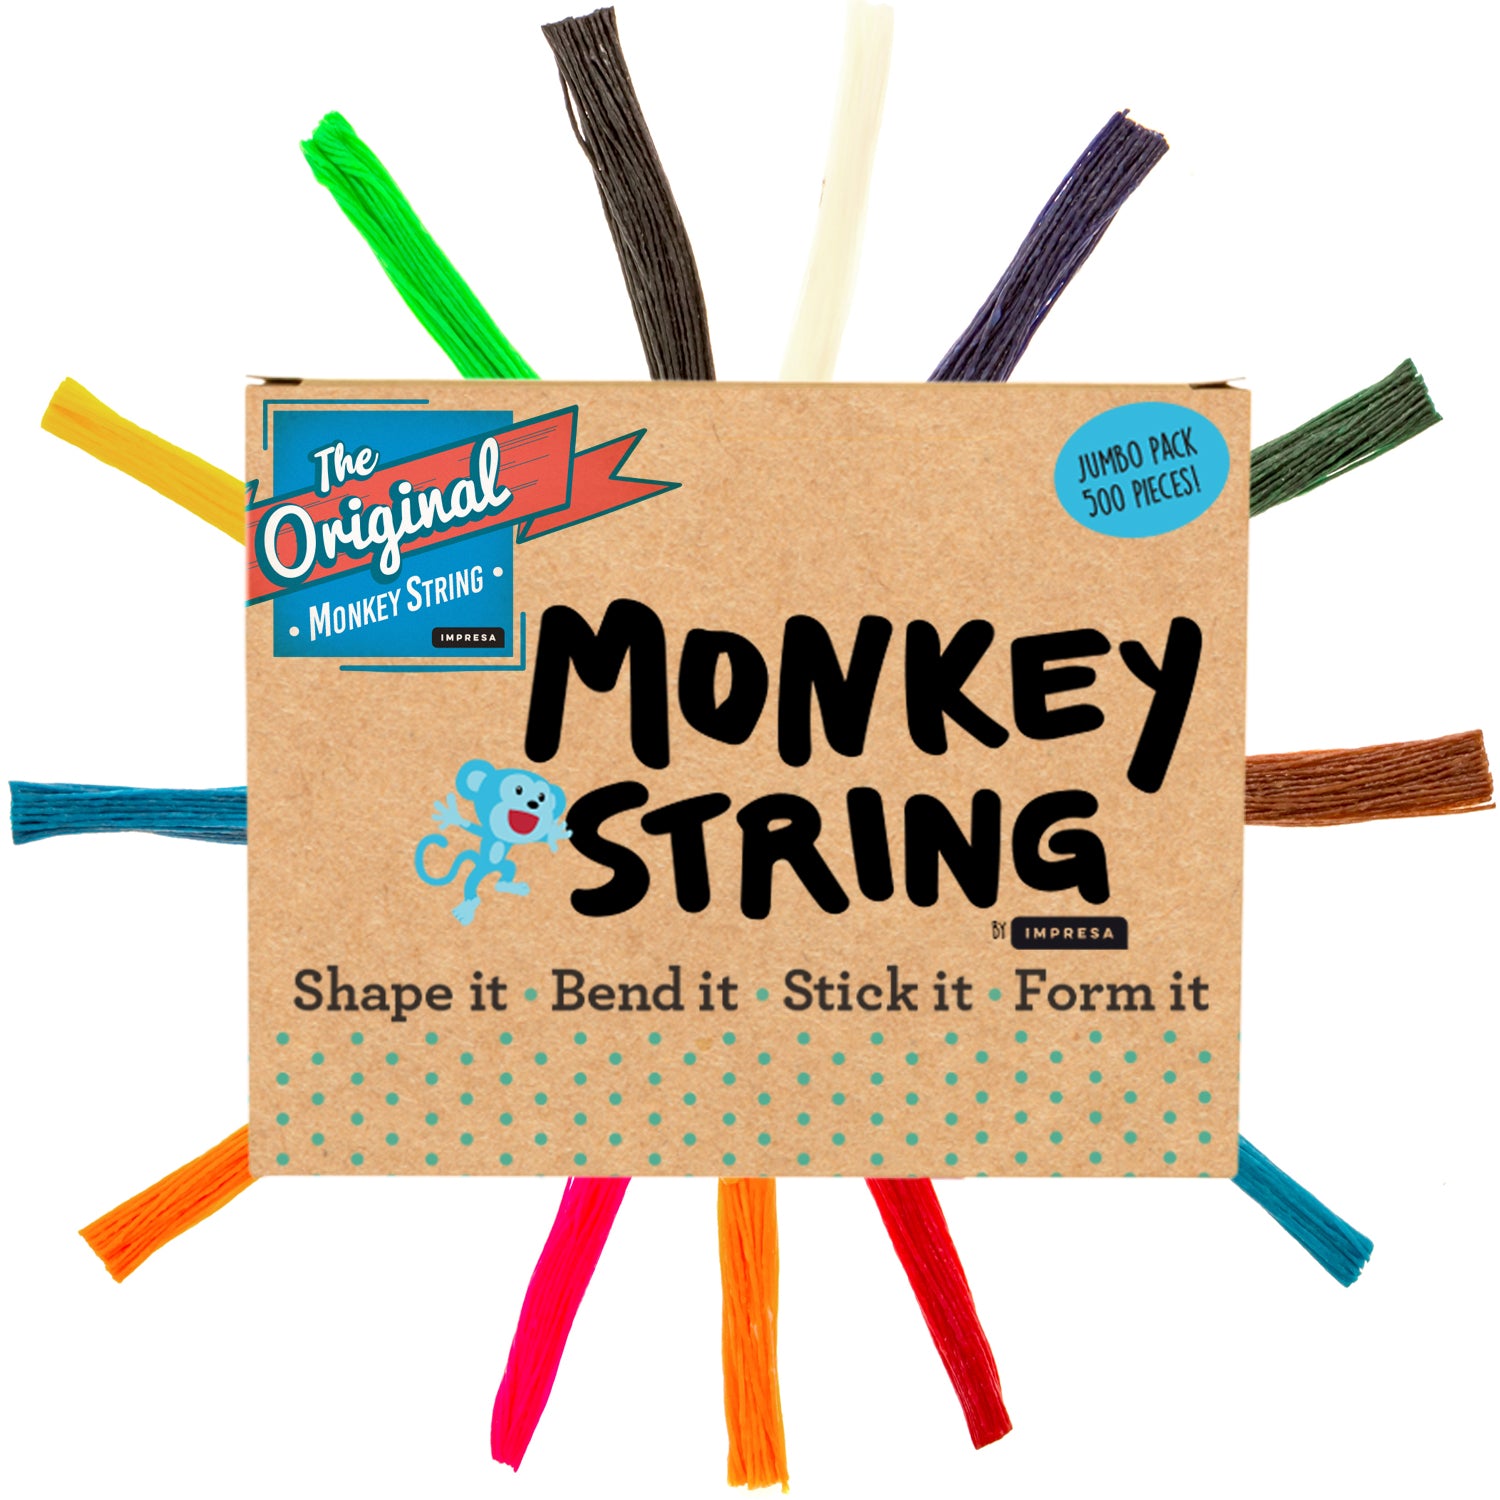  Wax Craft Sticks for Kids, Bendable Sticky Wax Yarn